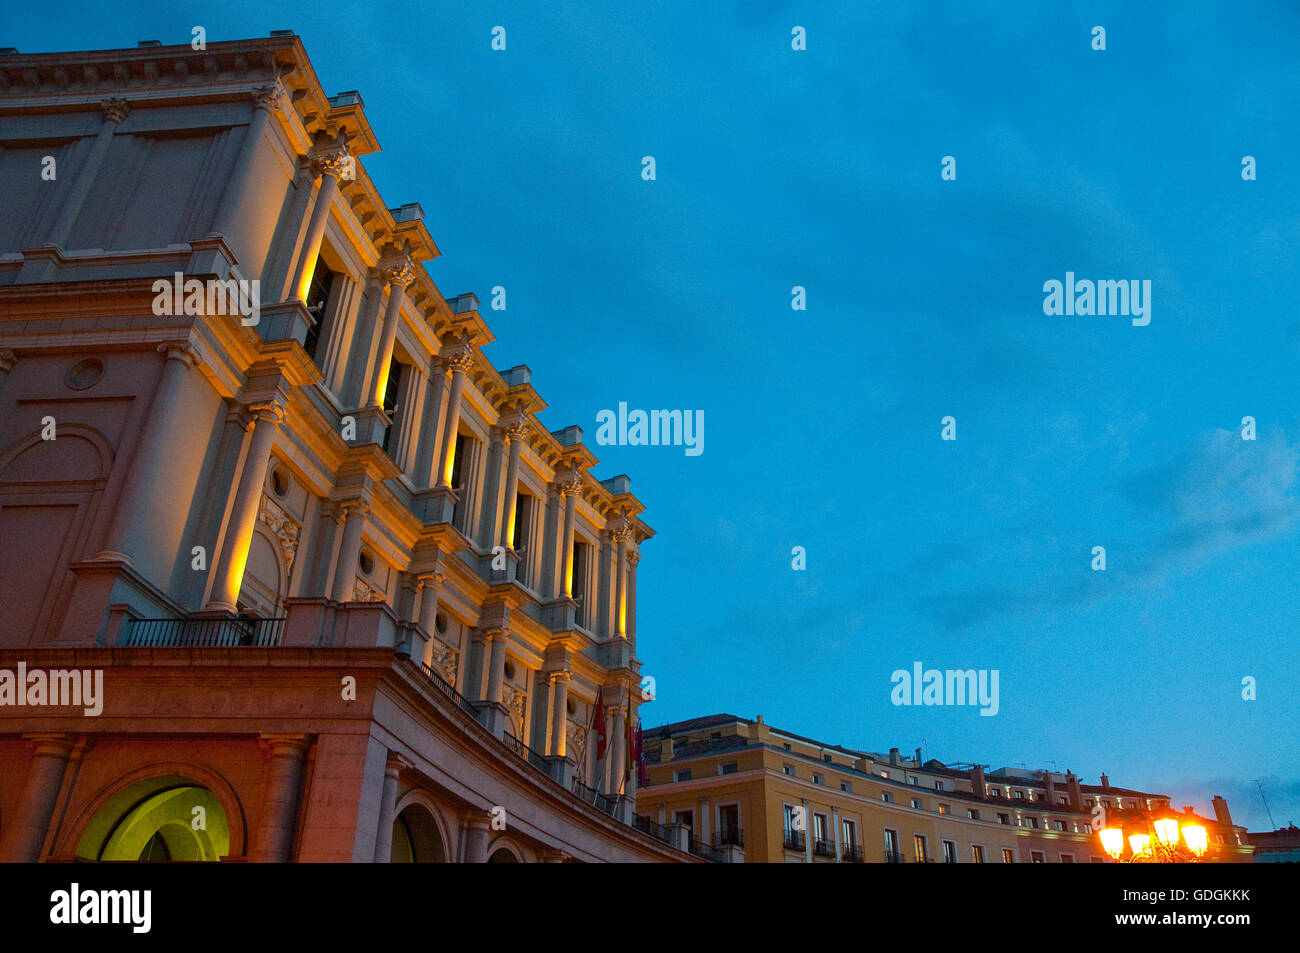 Royal Theater, night view. Oriente Square, Madrid, Spain. Stock Photo